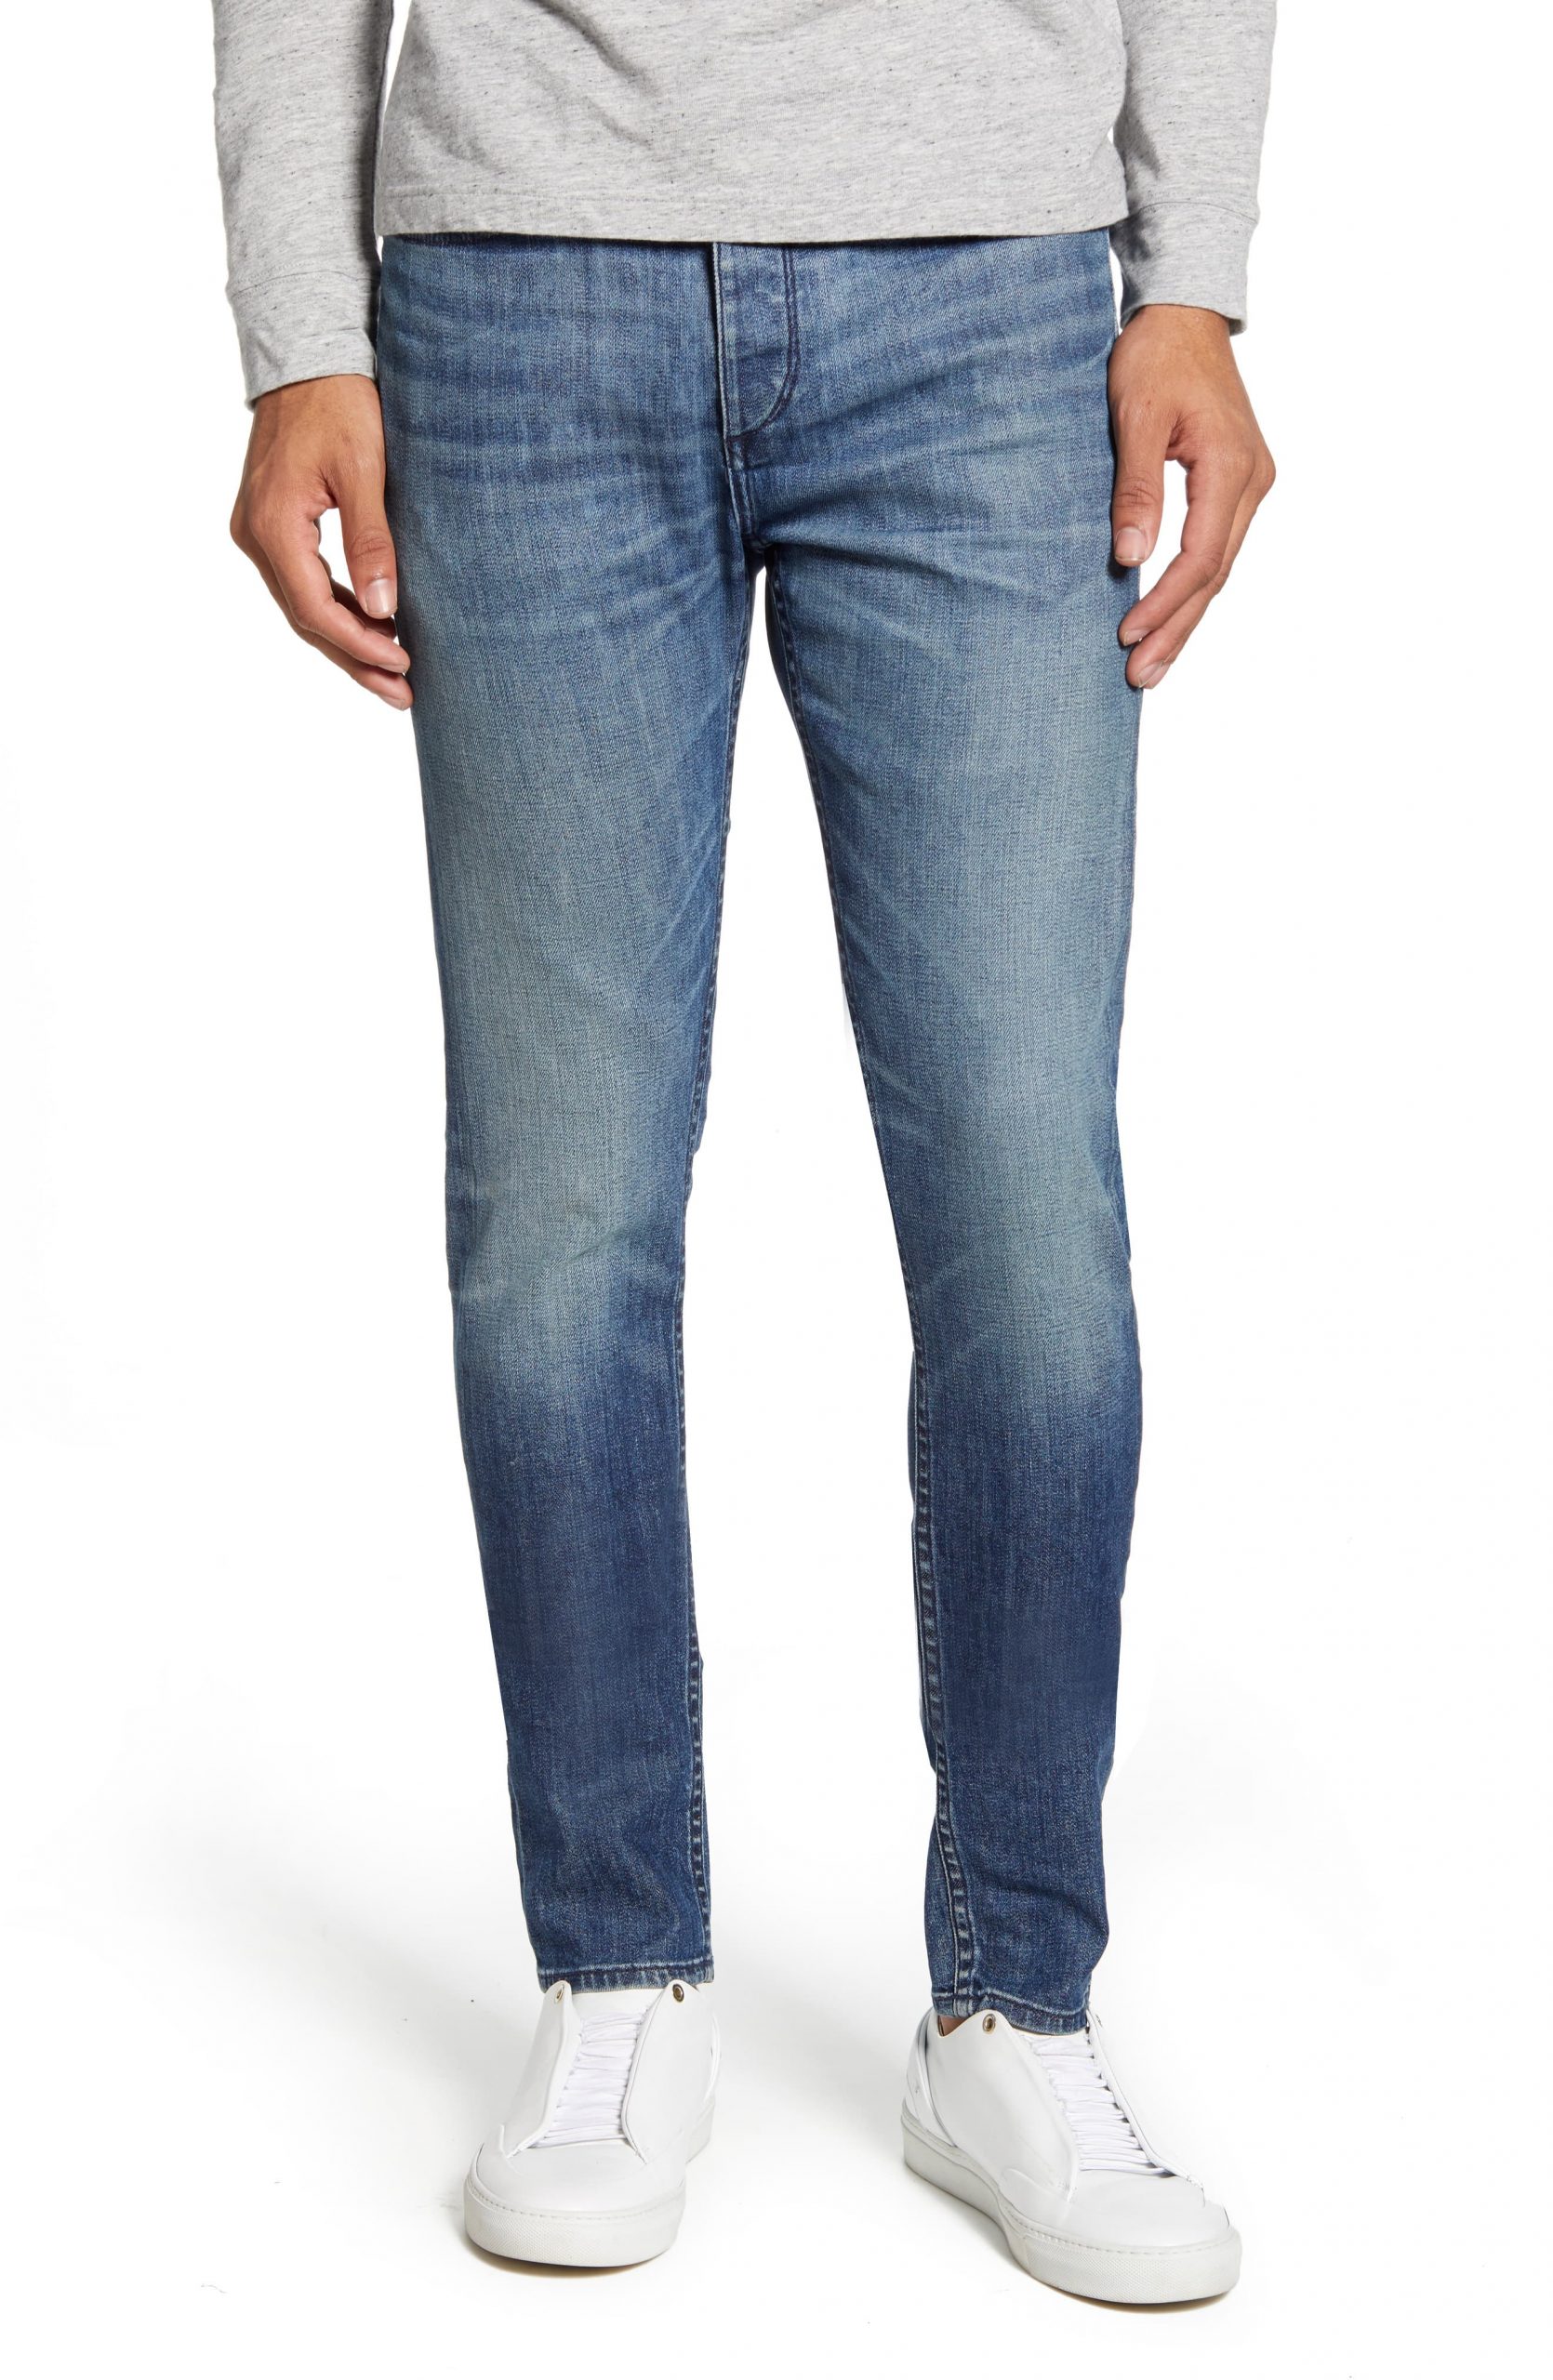 mens skinny jeans size 38